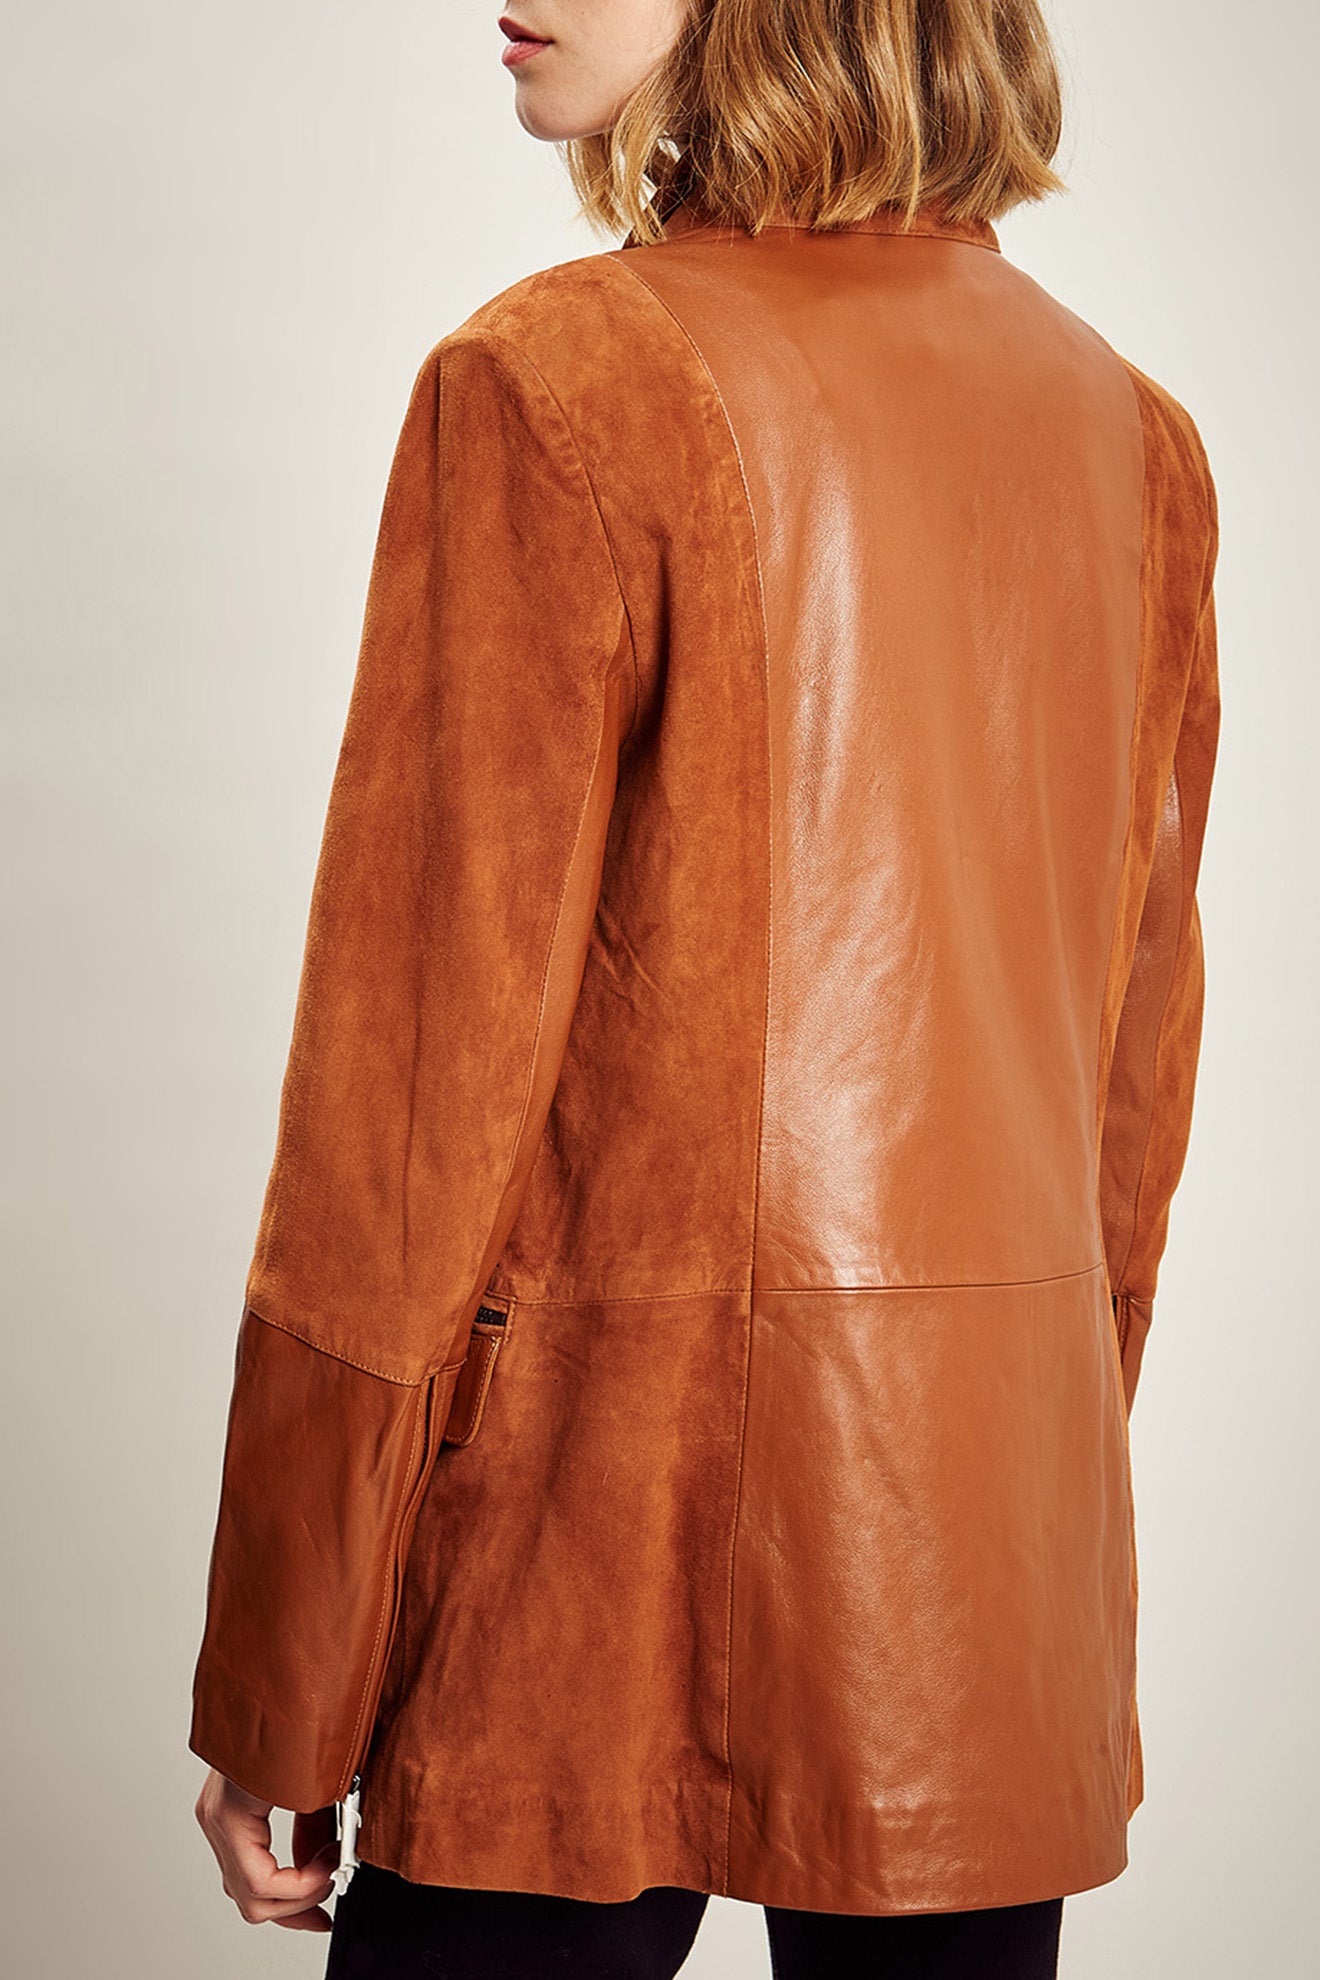 veste Emilda velours de la marque giorgio y mario en véritable cuir et daim pour femme de couleur camel marron